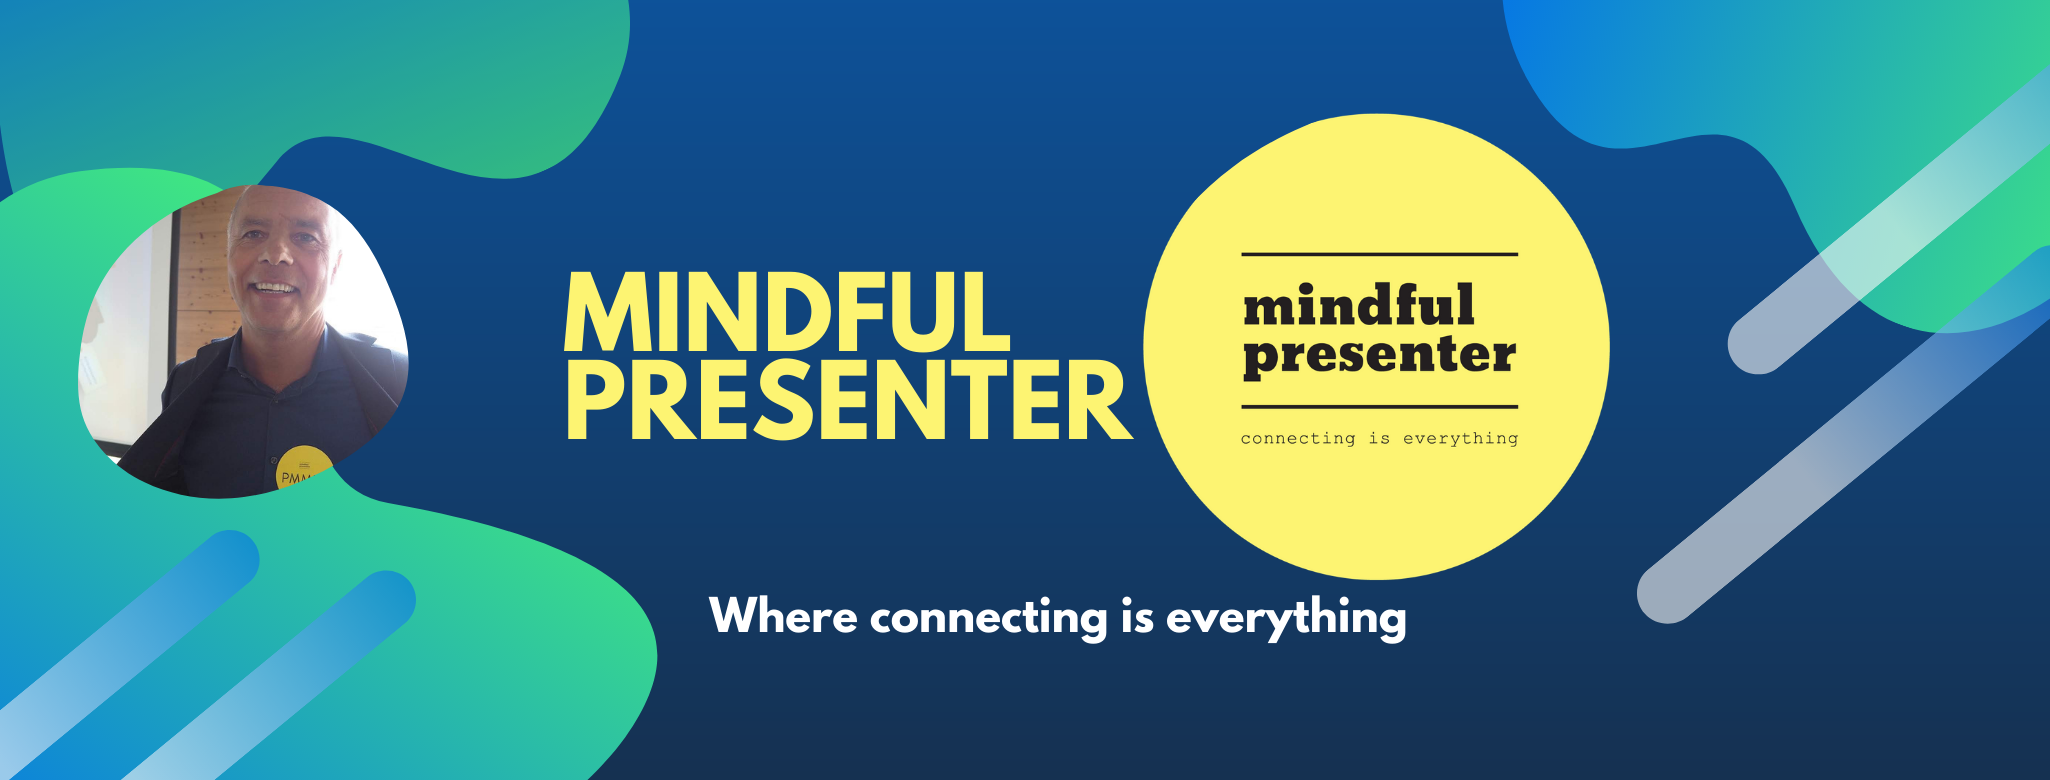 Mindful Presenter Ltd